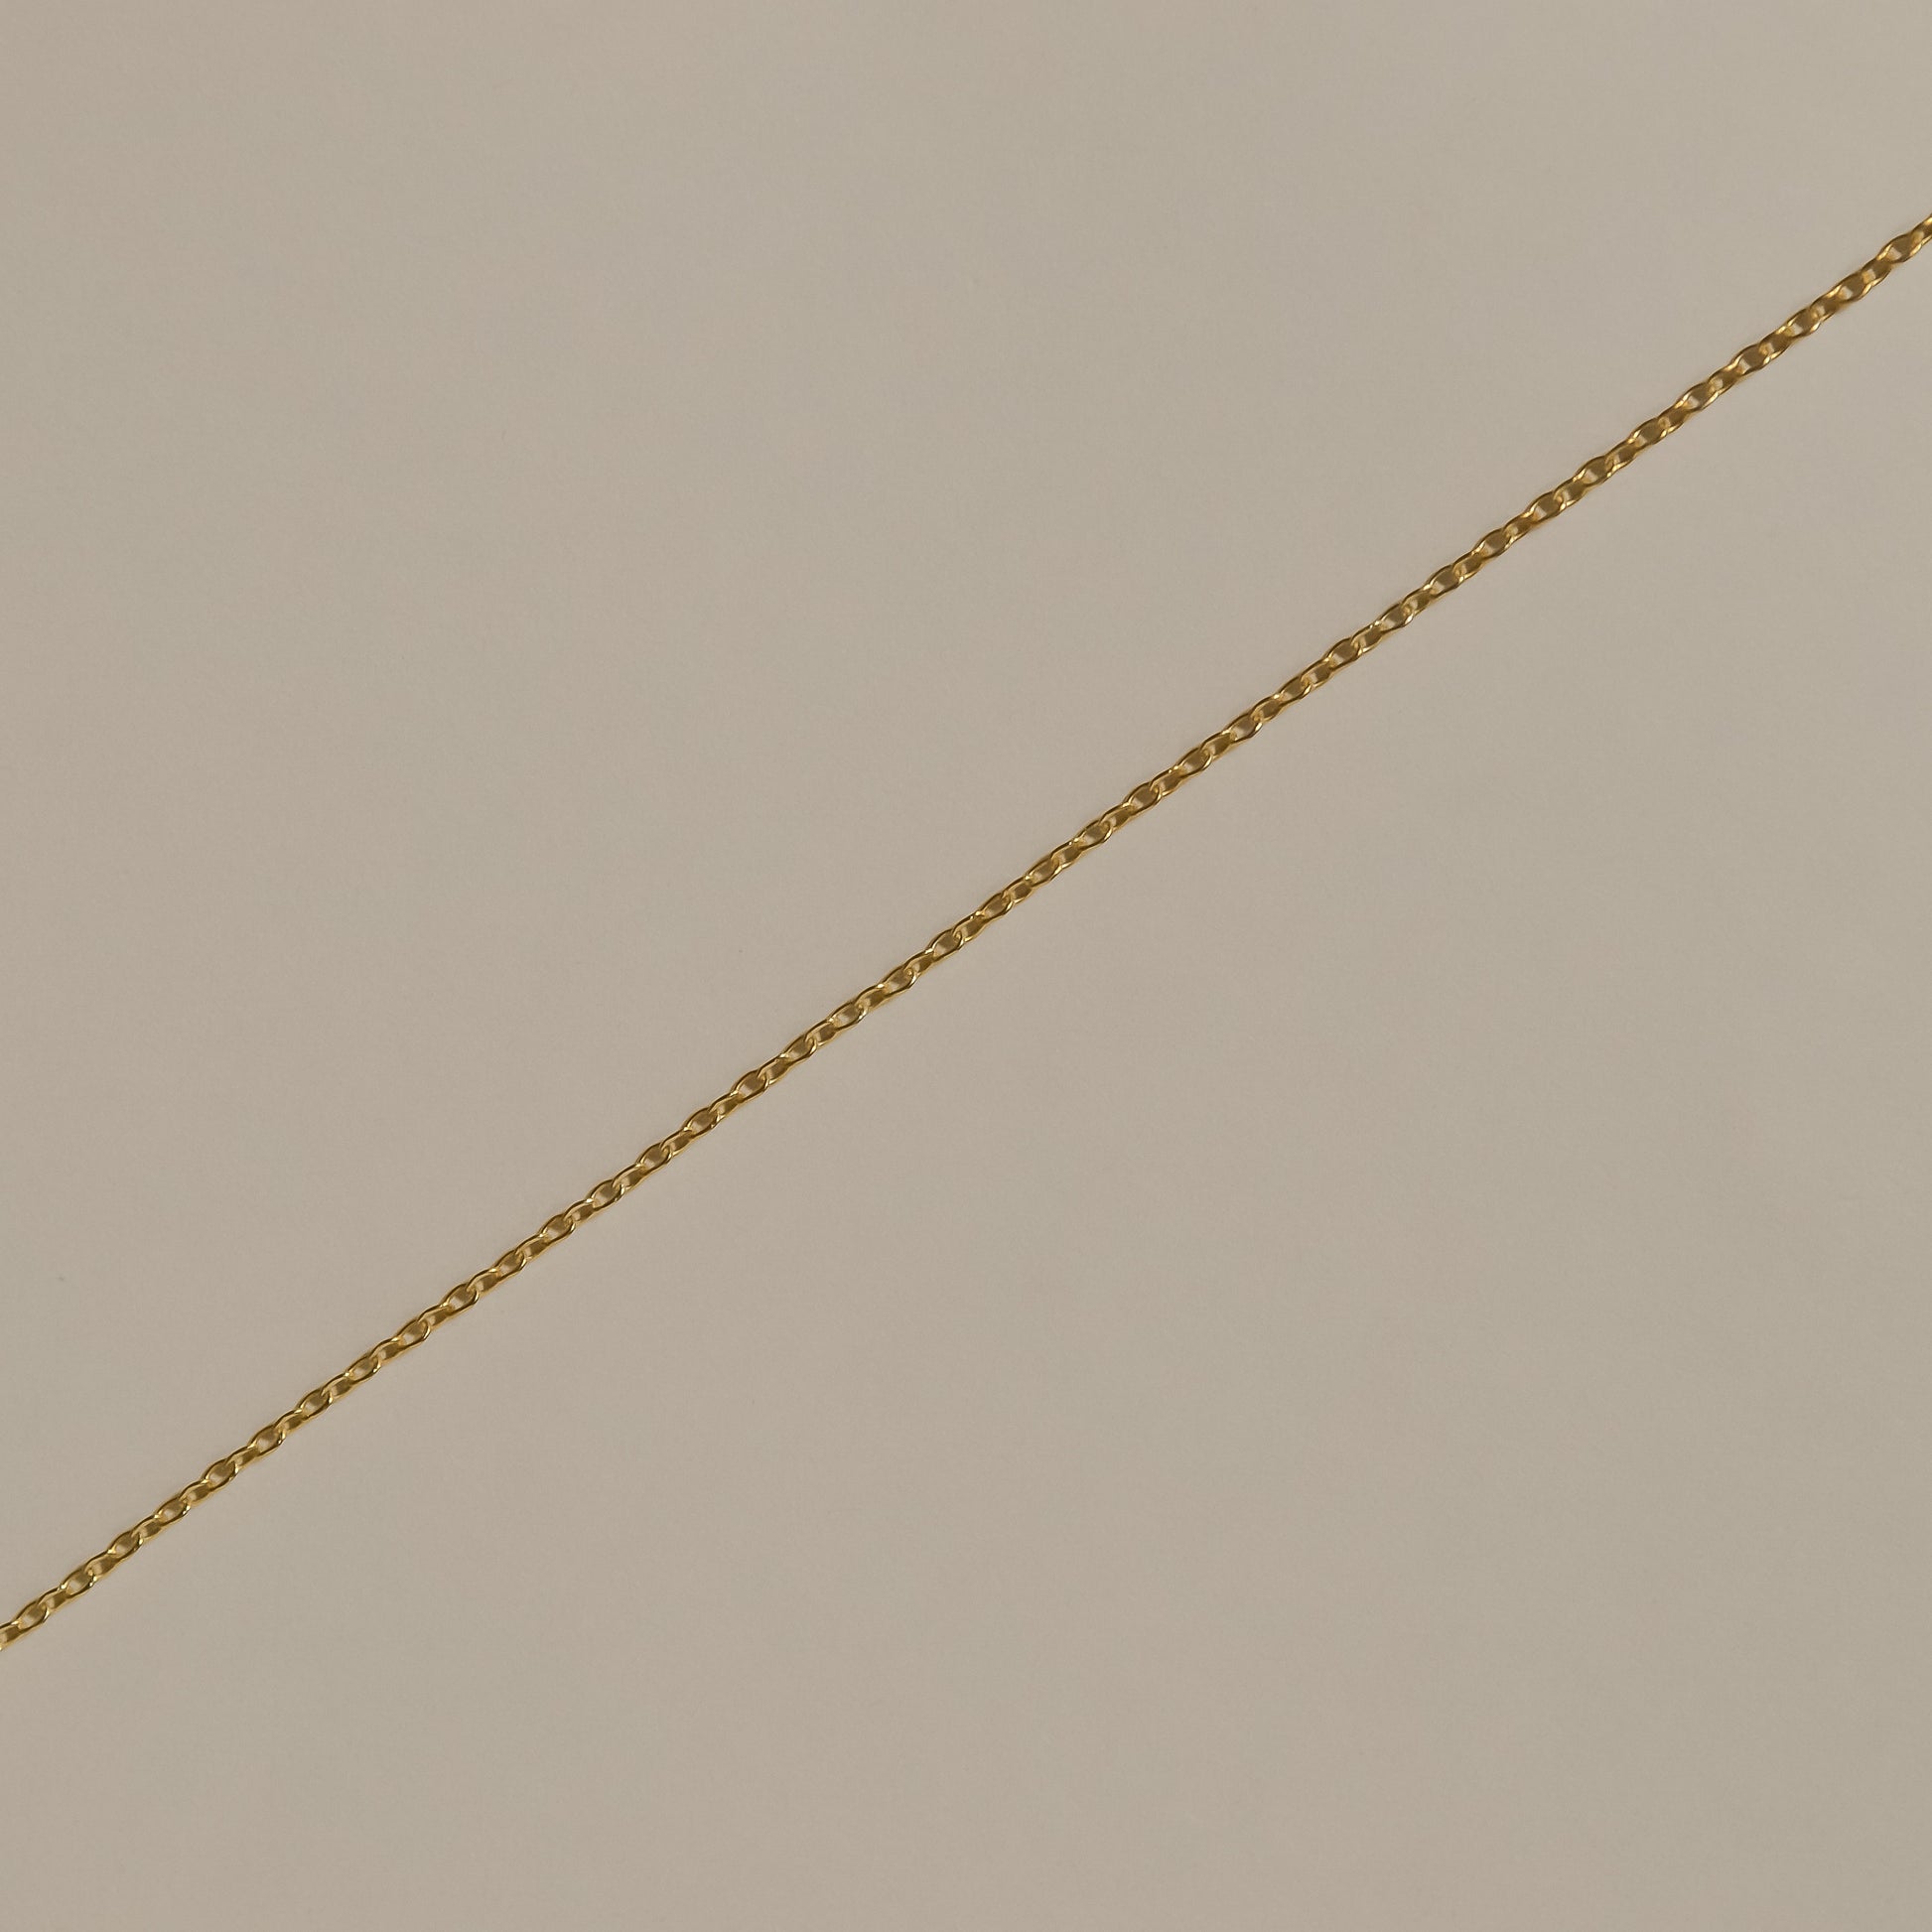 vermeil gold cable chain, fine, dainty necklace